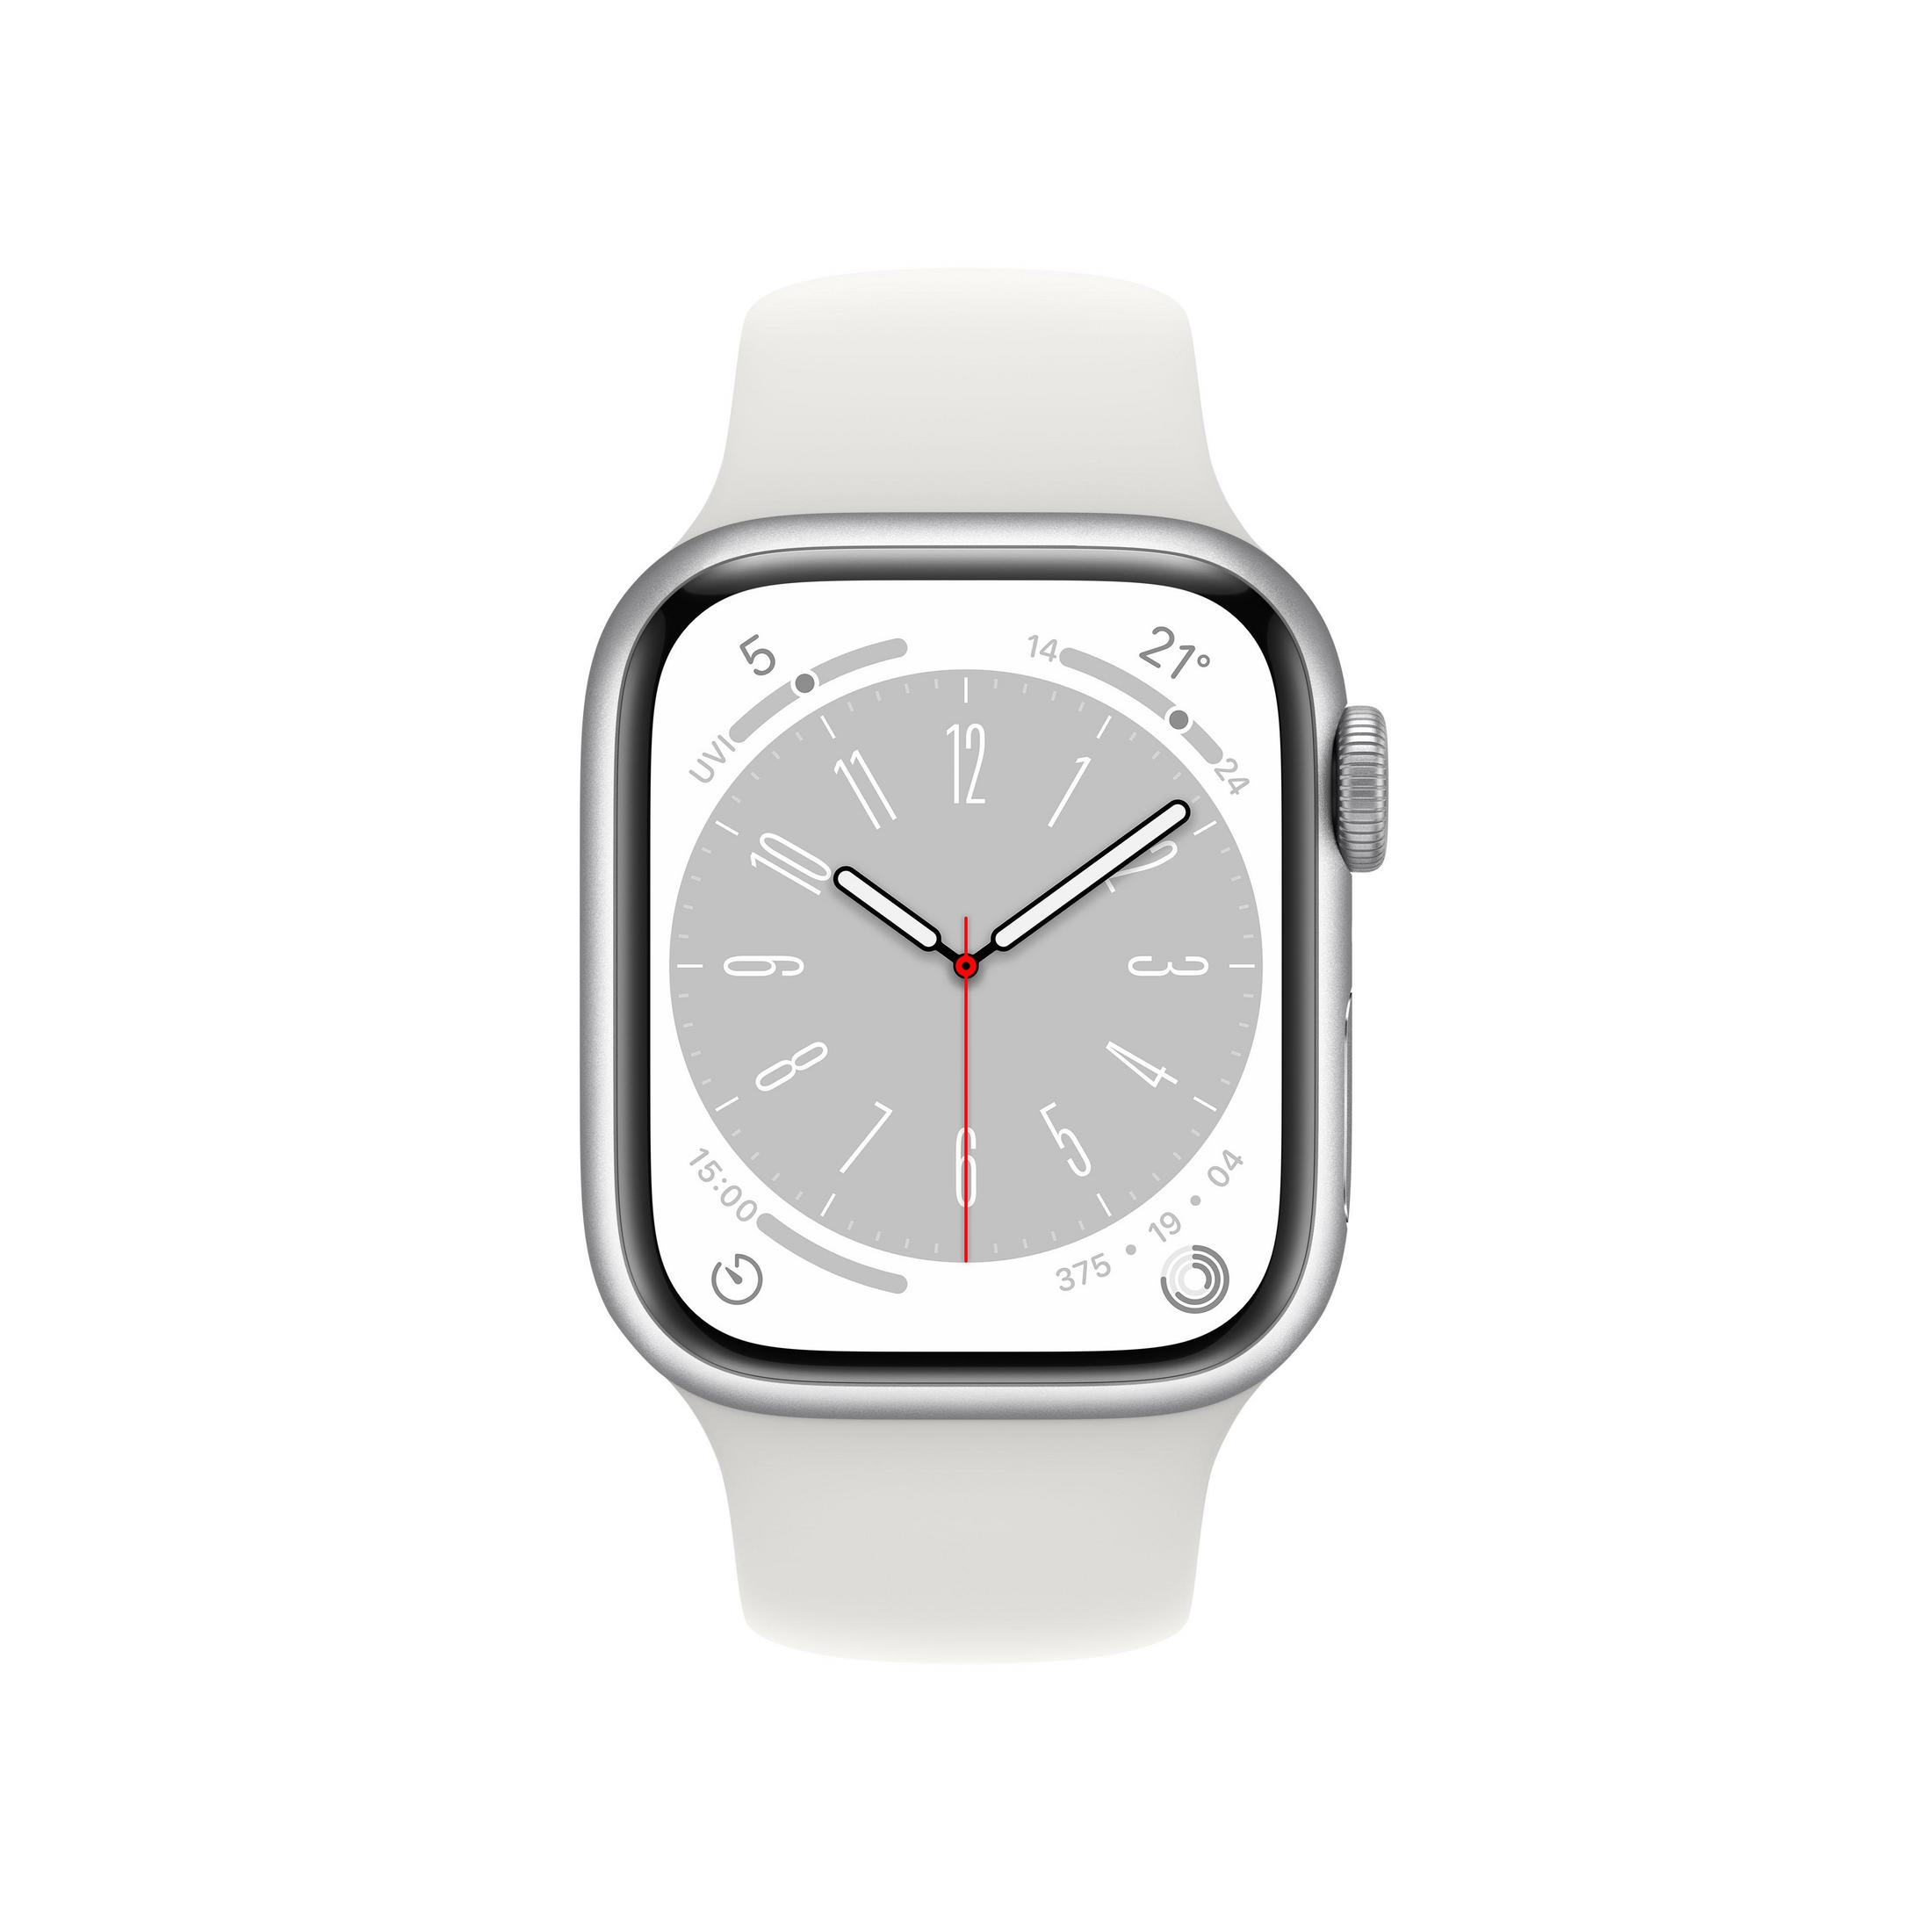 APPLE S8 GPS+CEL 41 Gehäuse: Aluminium Silber WHITE Smartwatch REG 200 W 130 mm, SIL Fluorelastomer, SPORT Armband: ALU - Weiß